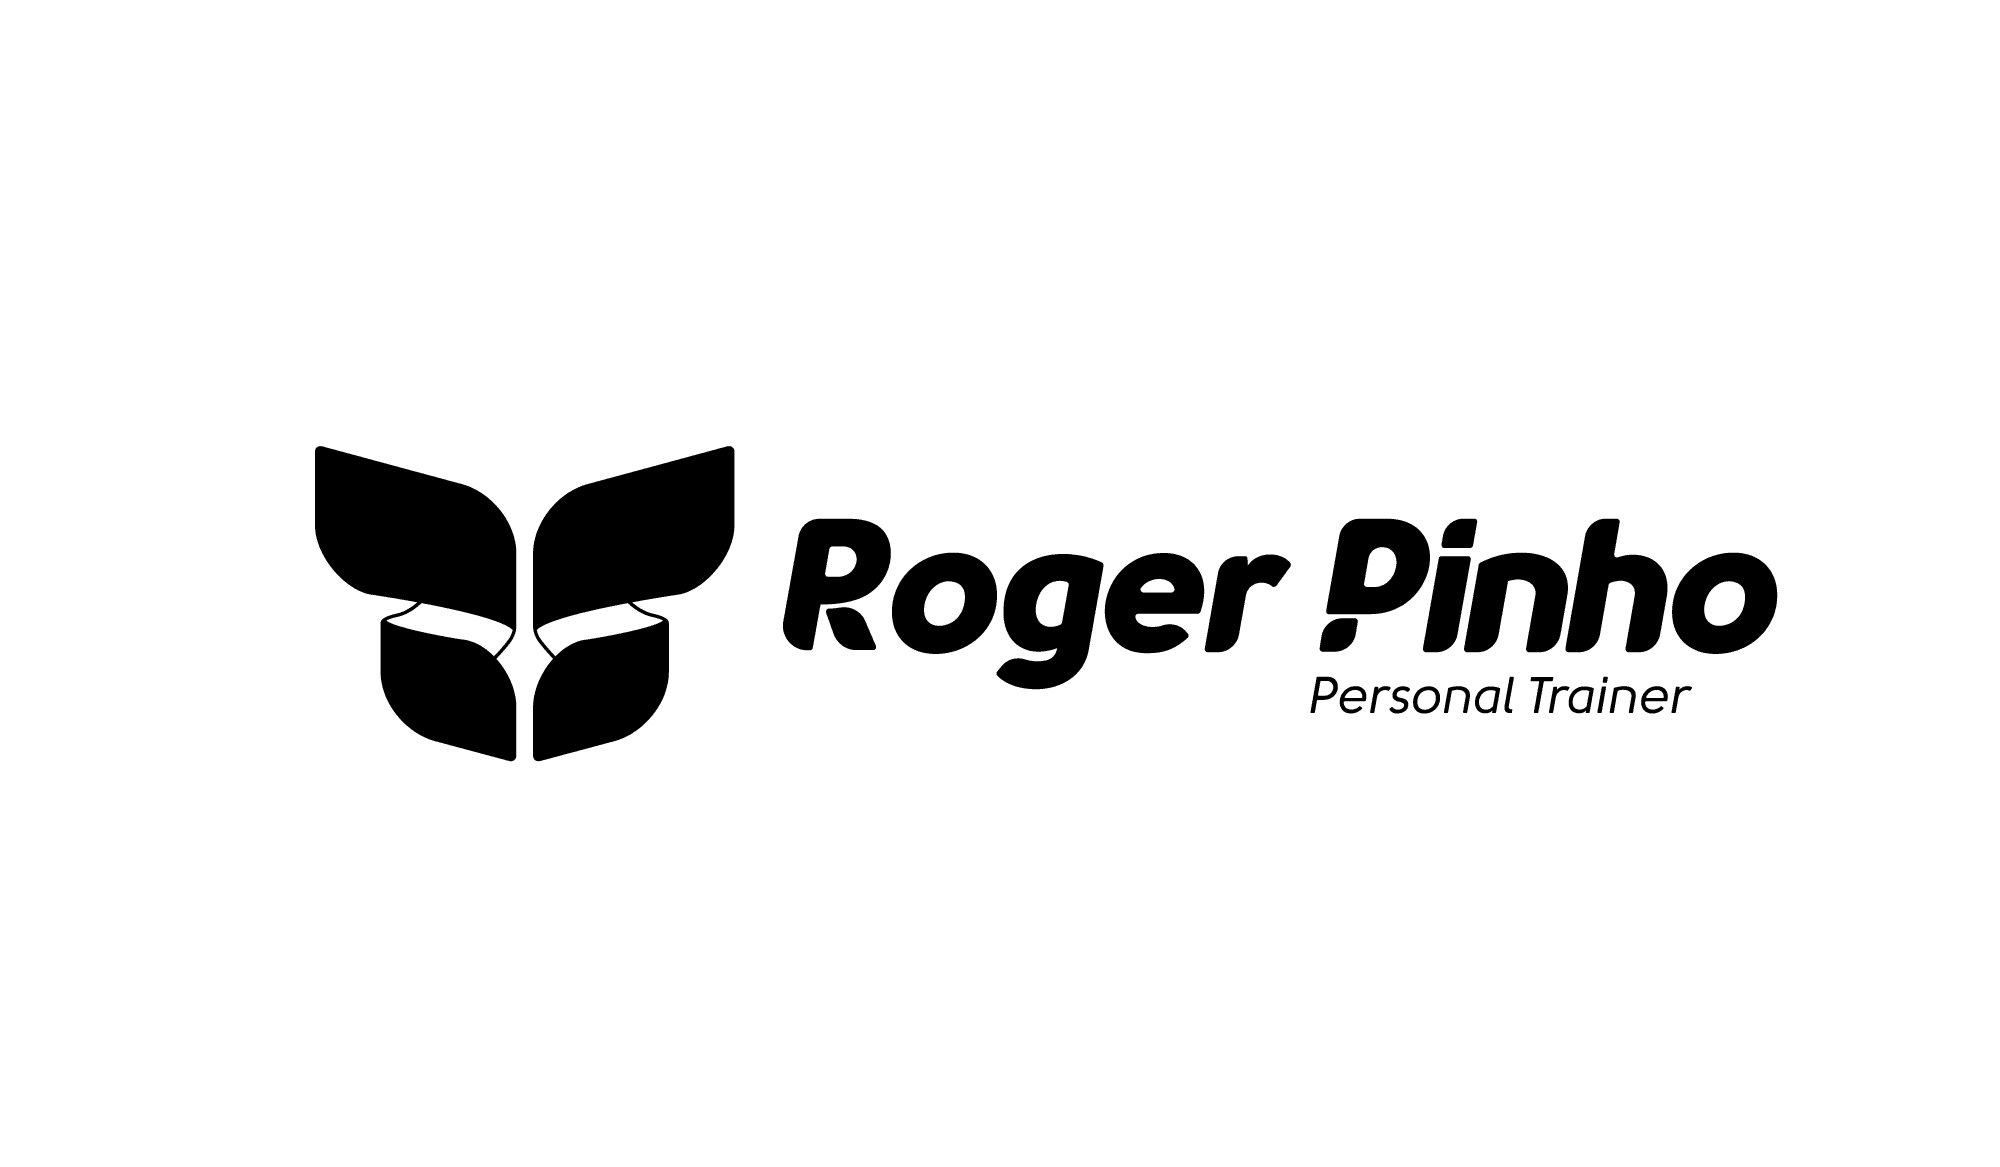 Personal Roger Pinho